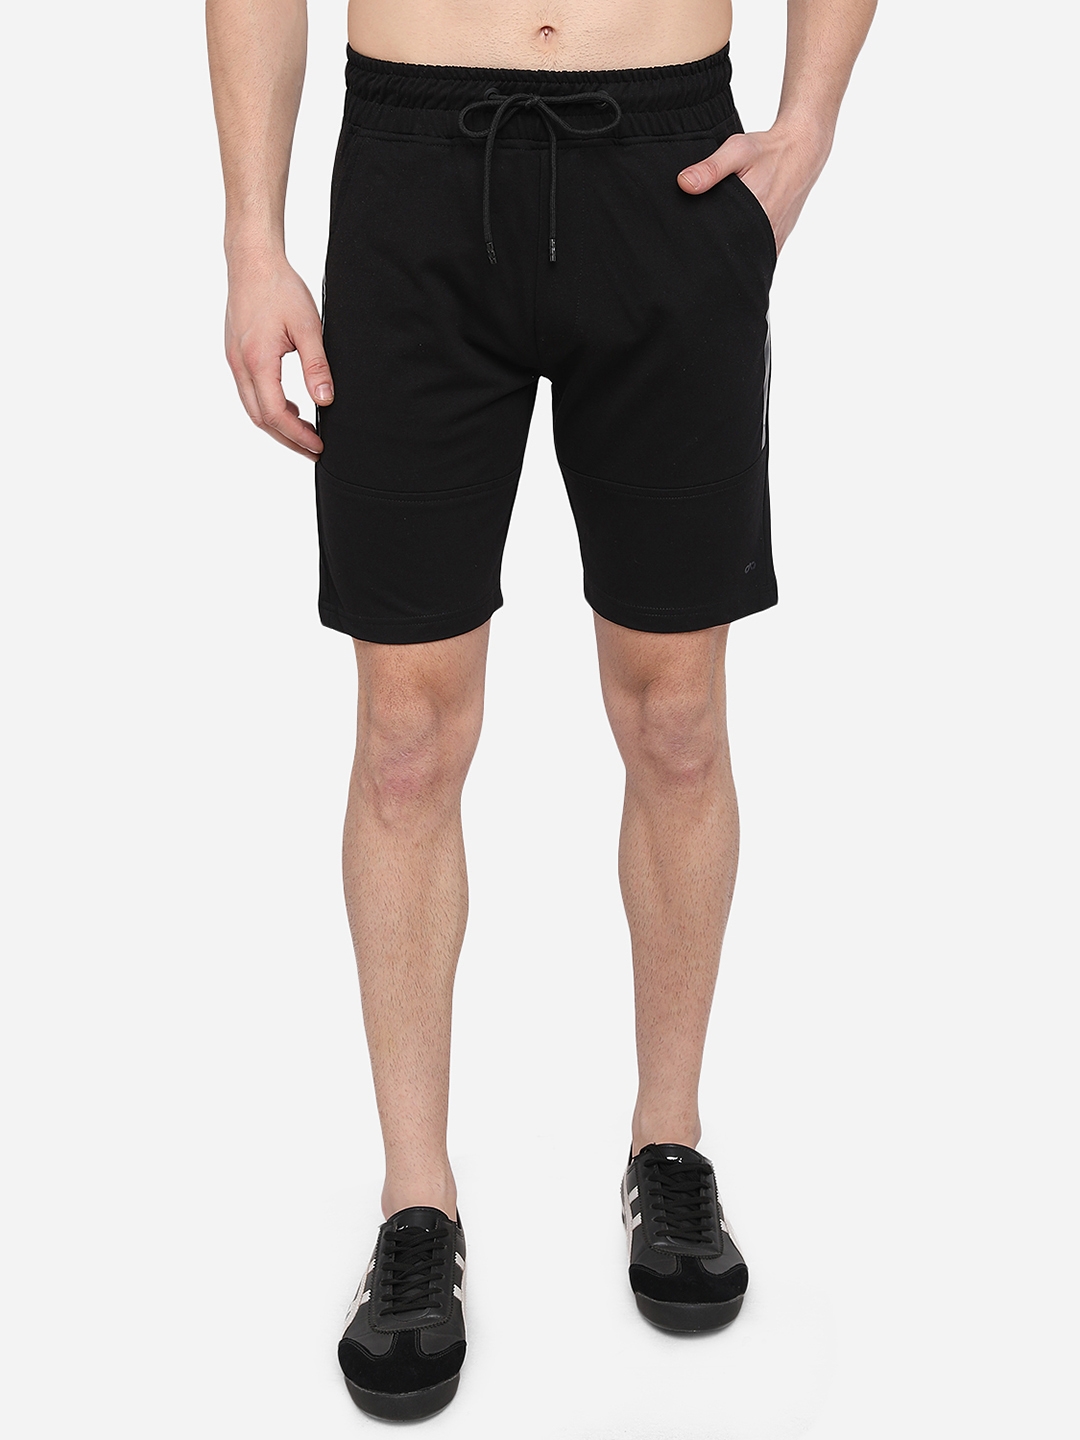 JadeBlue | Black Solid Shorts (JB-SH-023/B BLACK)